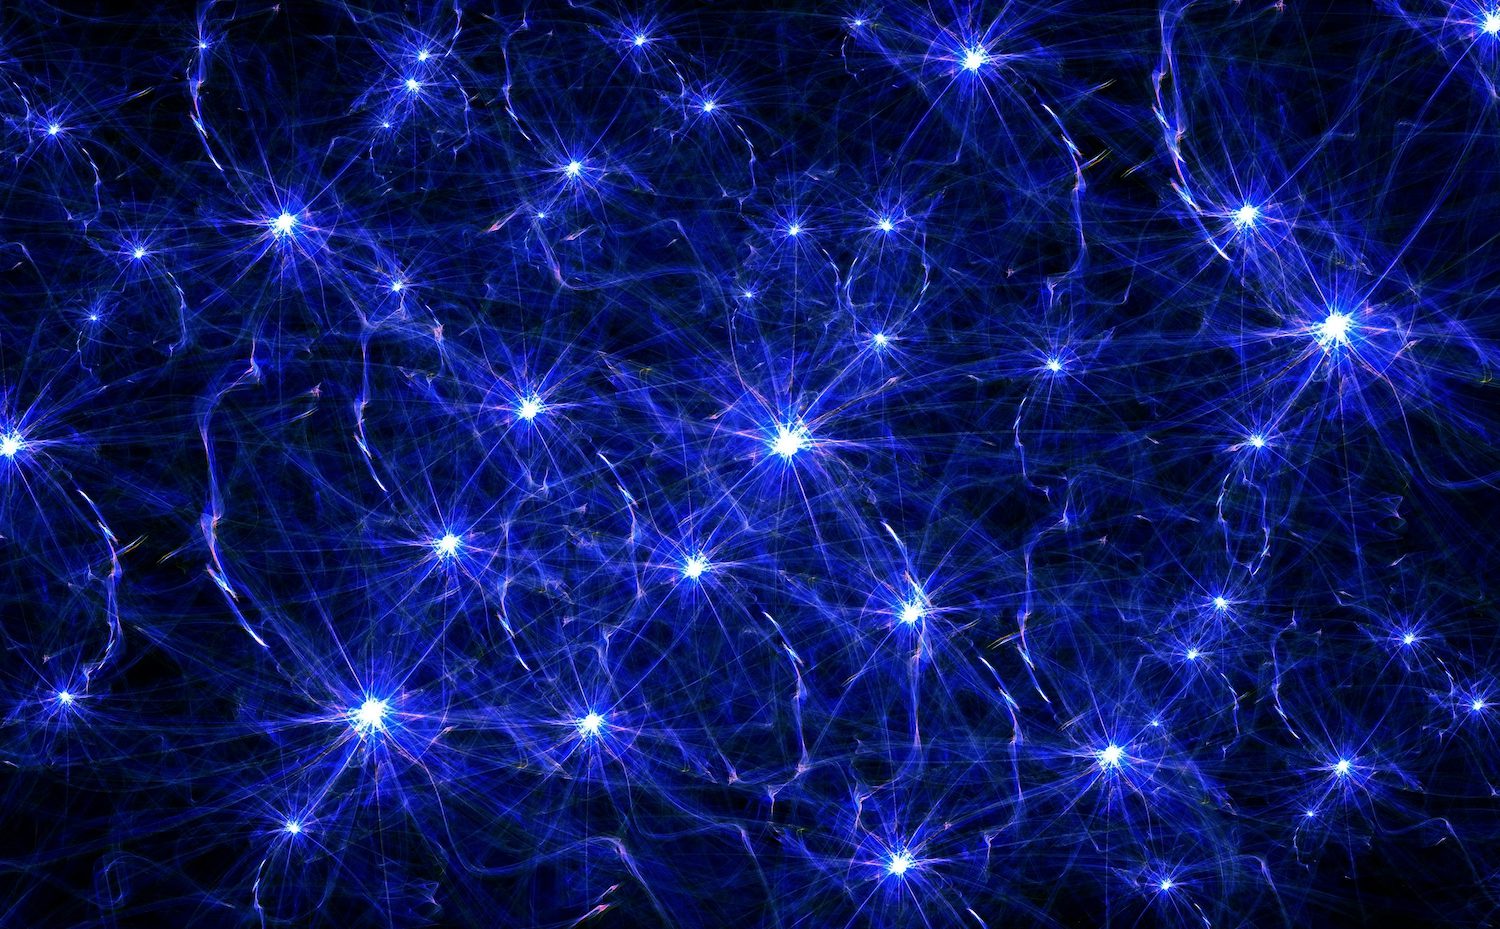 Neurons illustration